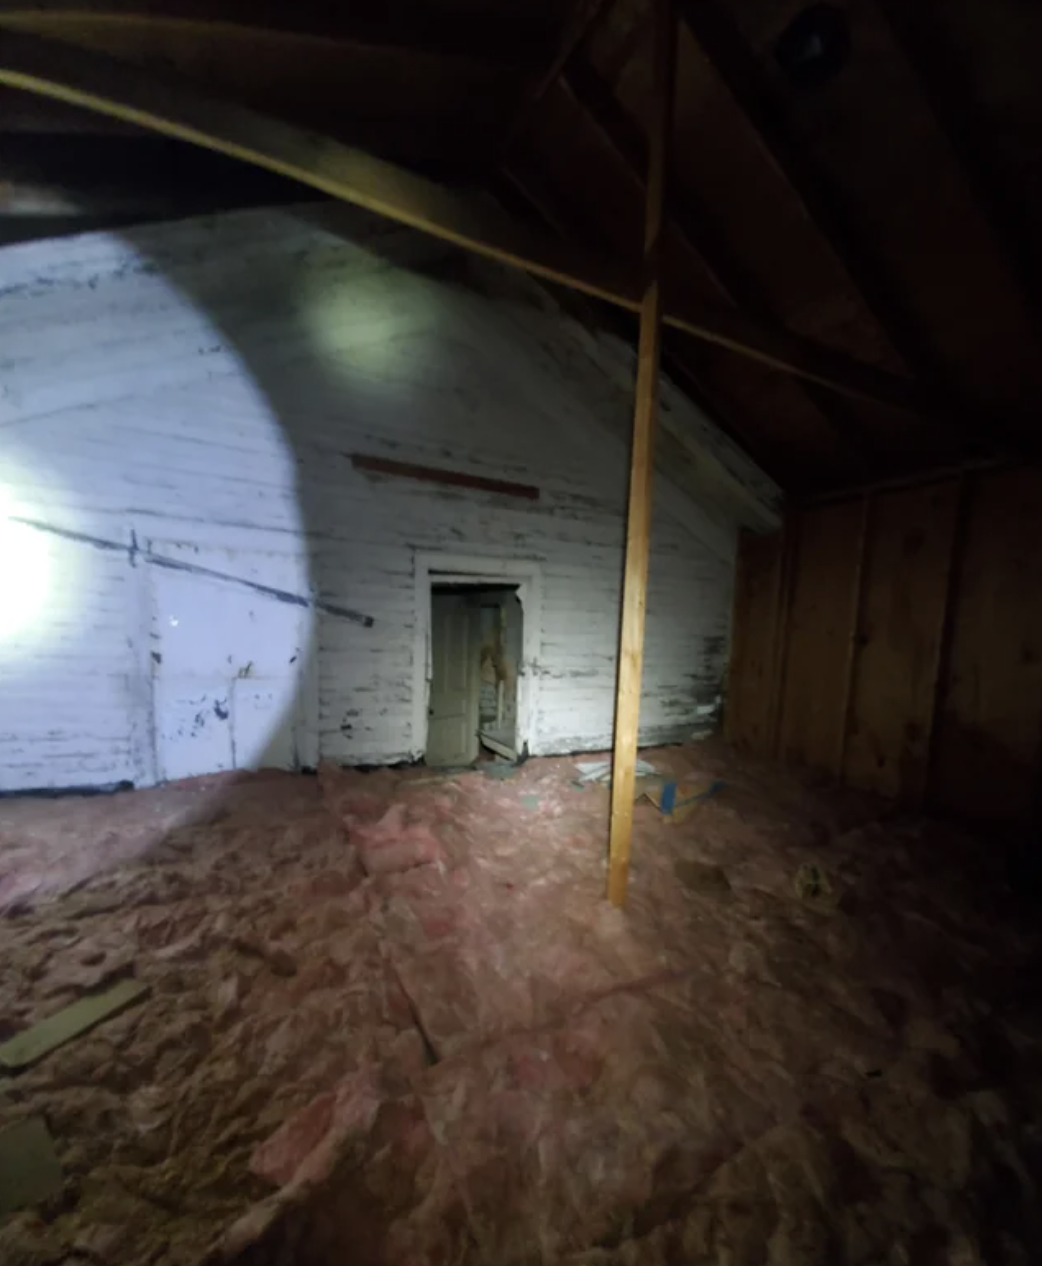 interesting posts - house in attic flashlight pic